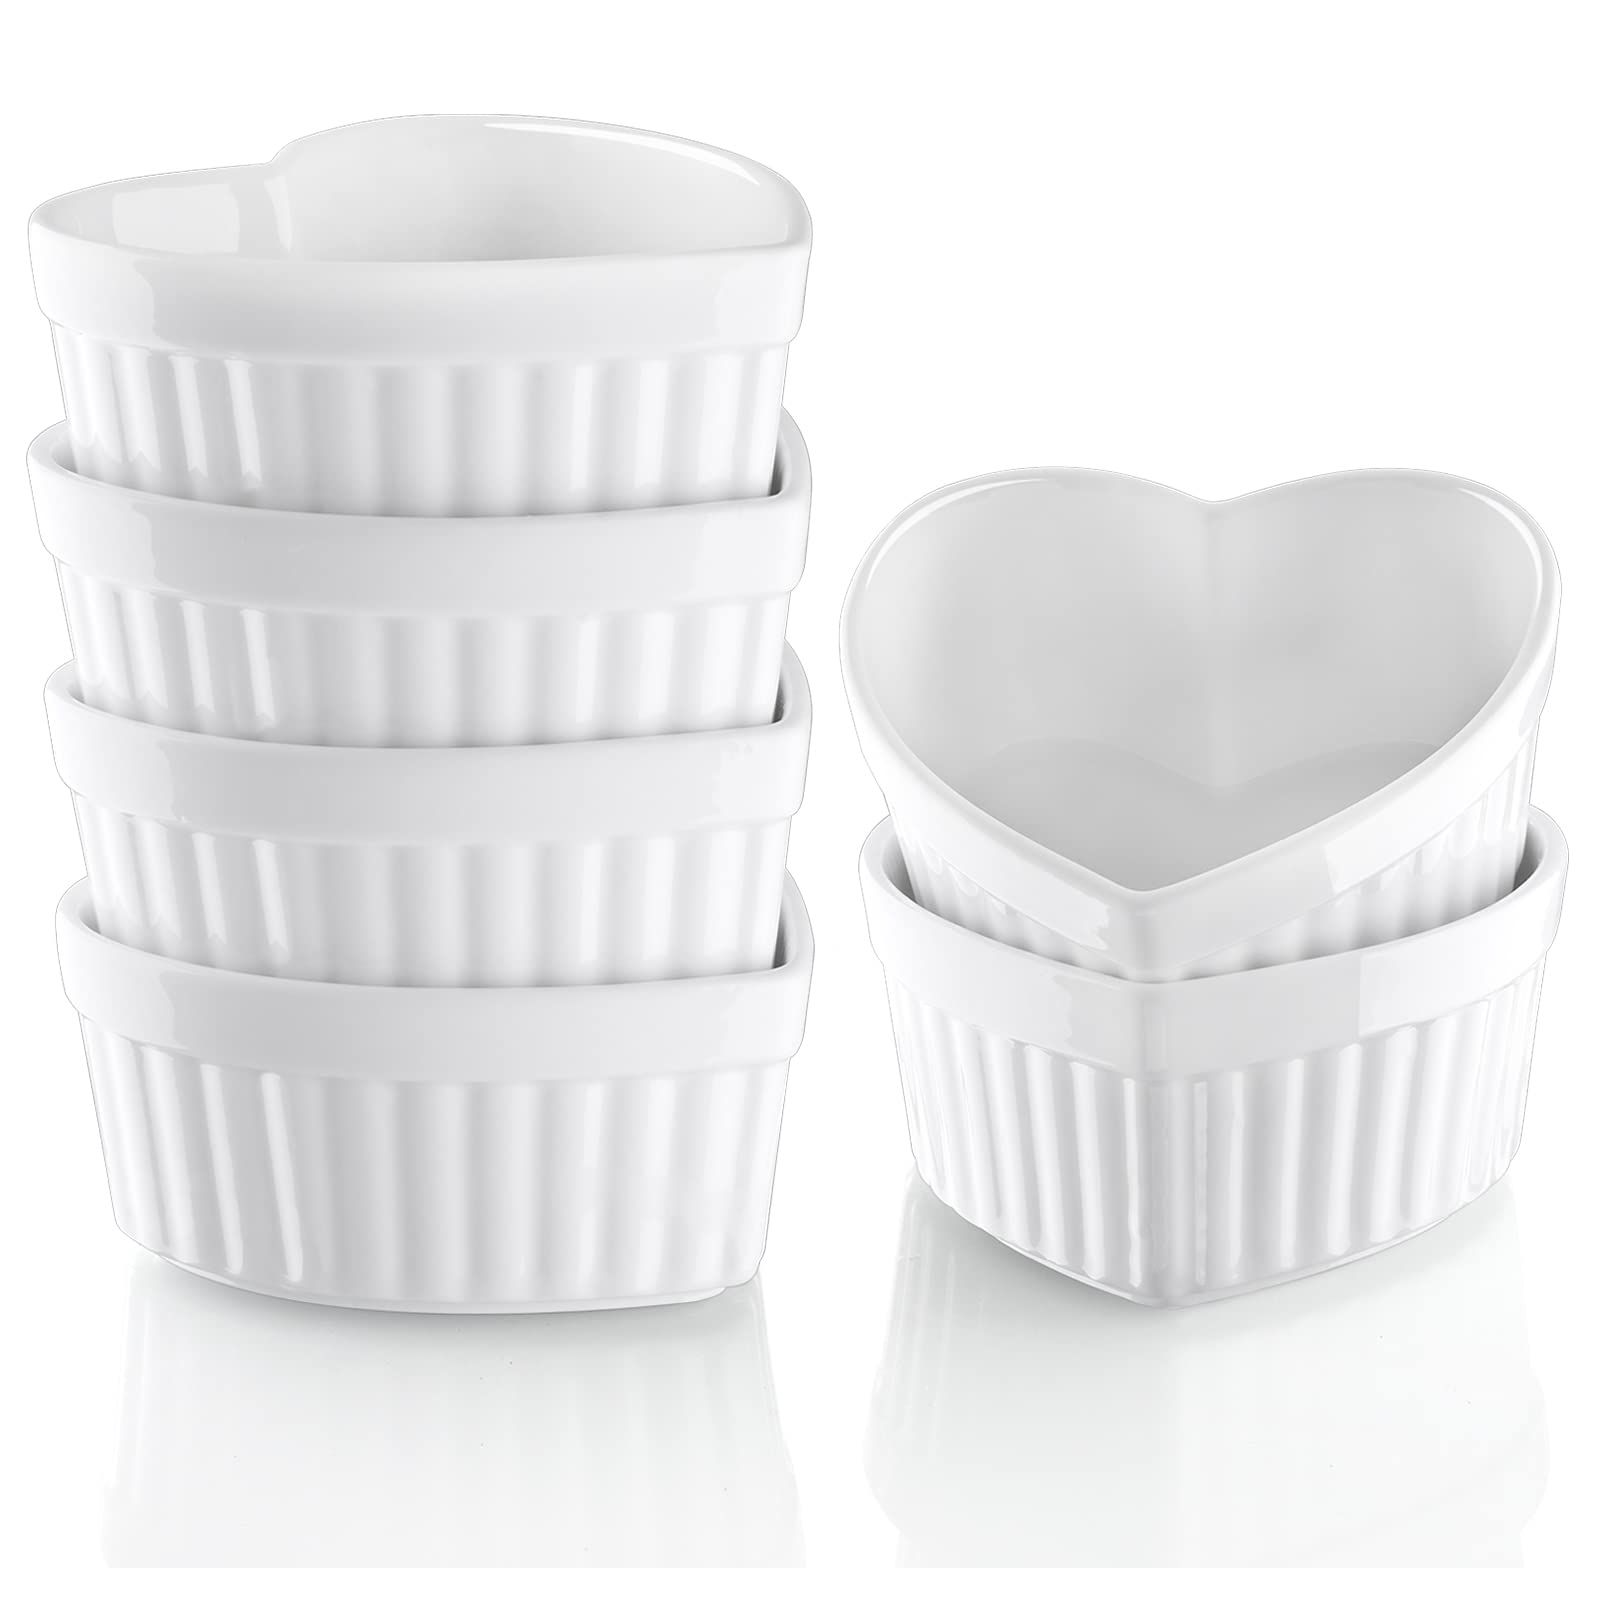 Creme Brulee Ramekins 4 oz Oven Safe, ALELION Heart Shaped Porcelain Ramekins for Baking, Souffle Di | Amazon (US)